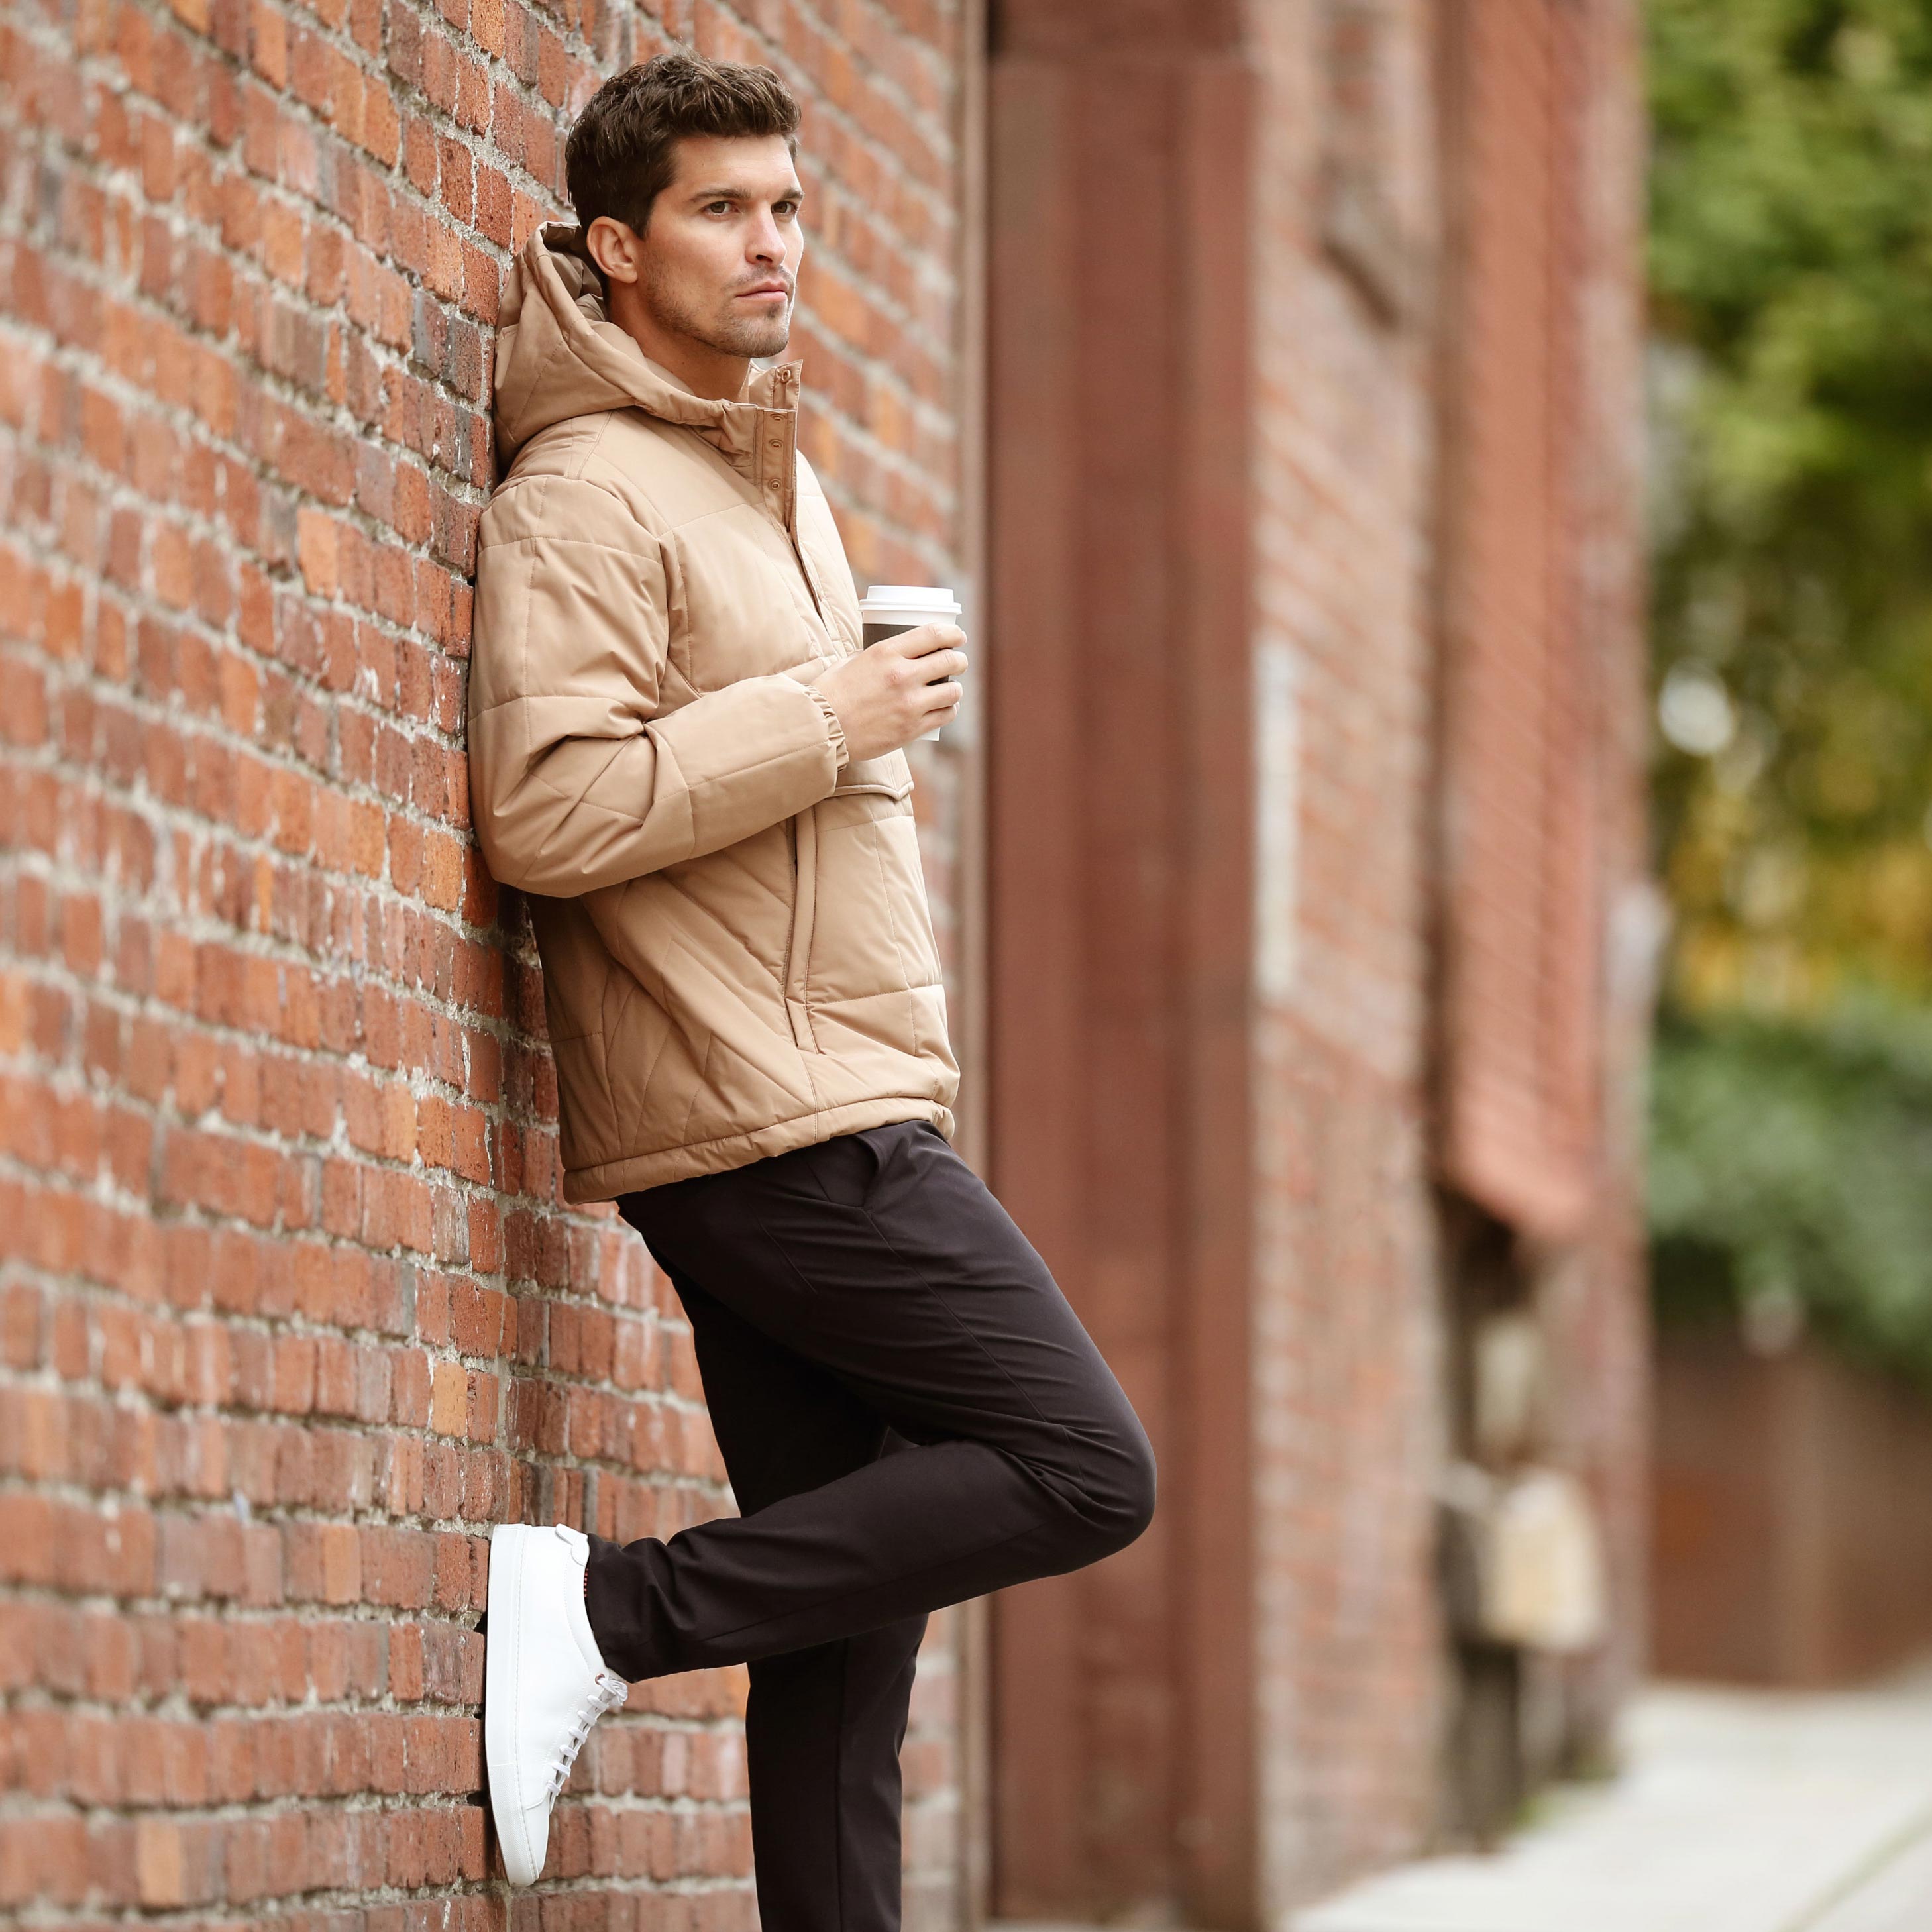 MPG male model leaning on a brick wall outside enjoying a coffee